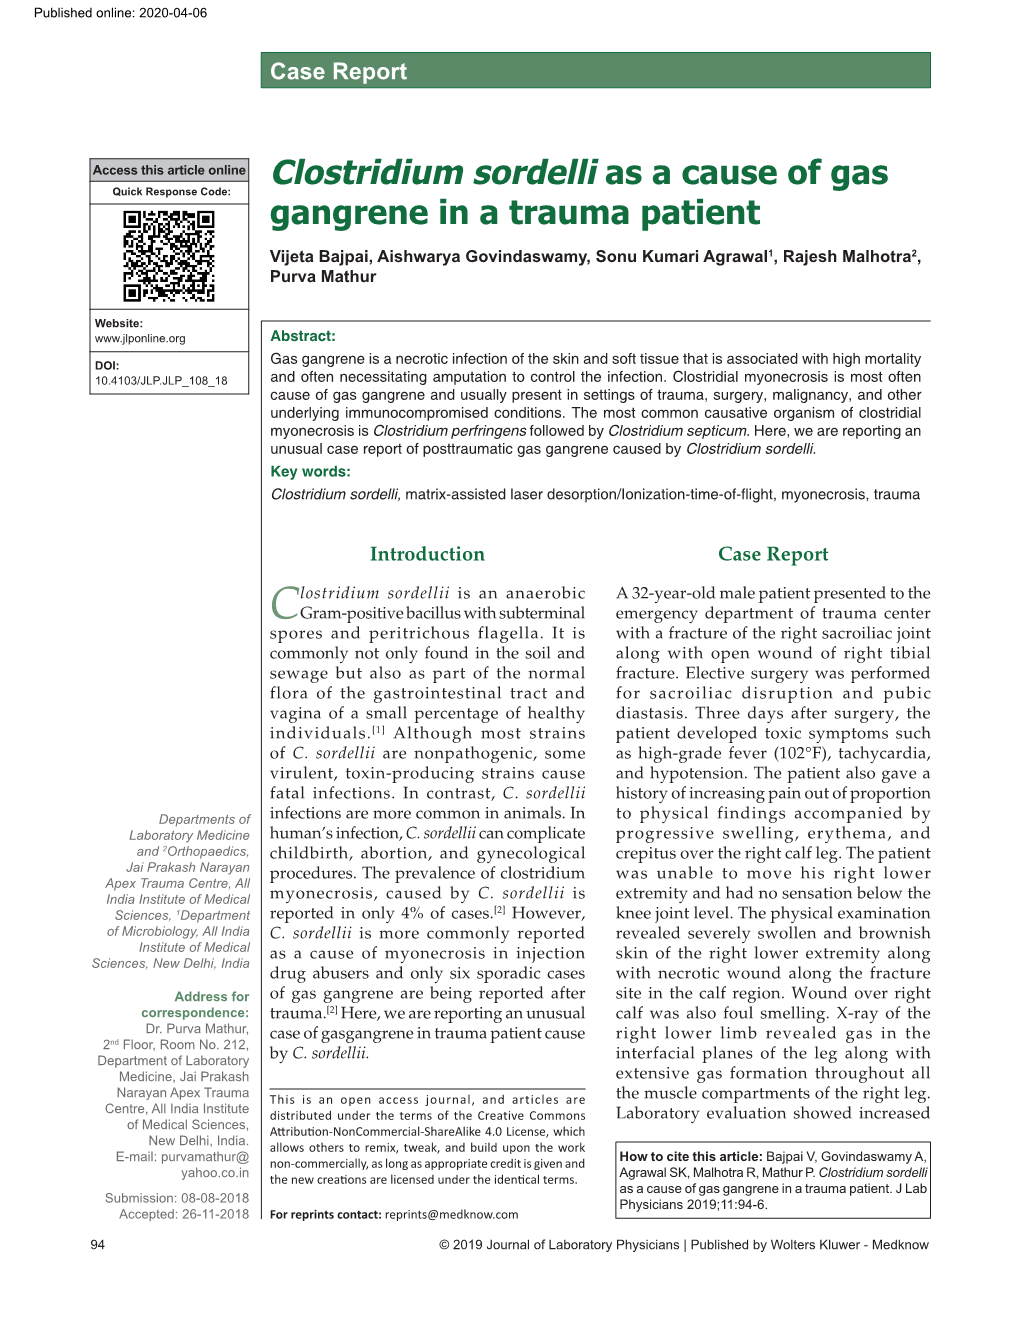 Clostridium Sordelli As a Cause of Gas Gangrene in a Trauma Patient Vijeta Bajpai, Aishwarya Govindaswamy, Sonu Kumari Agrawal1, Rajesh Malhotra2, Purva Mathur